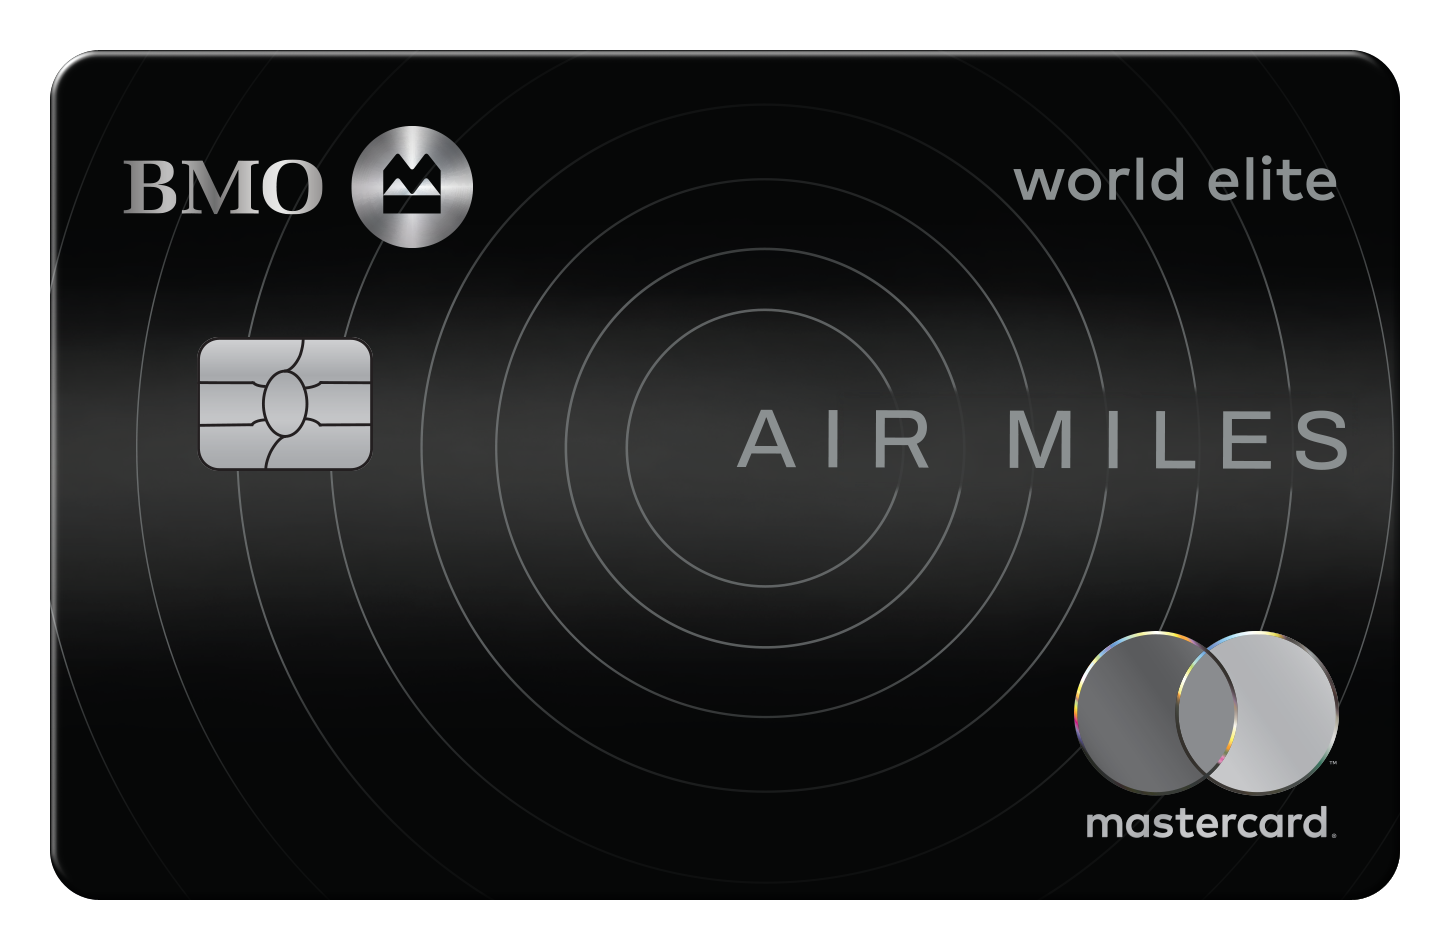 bmo air miles world elite travel insurance